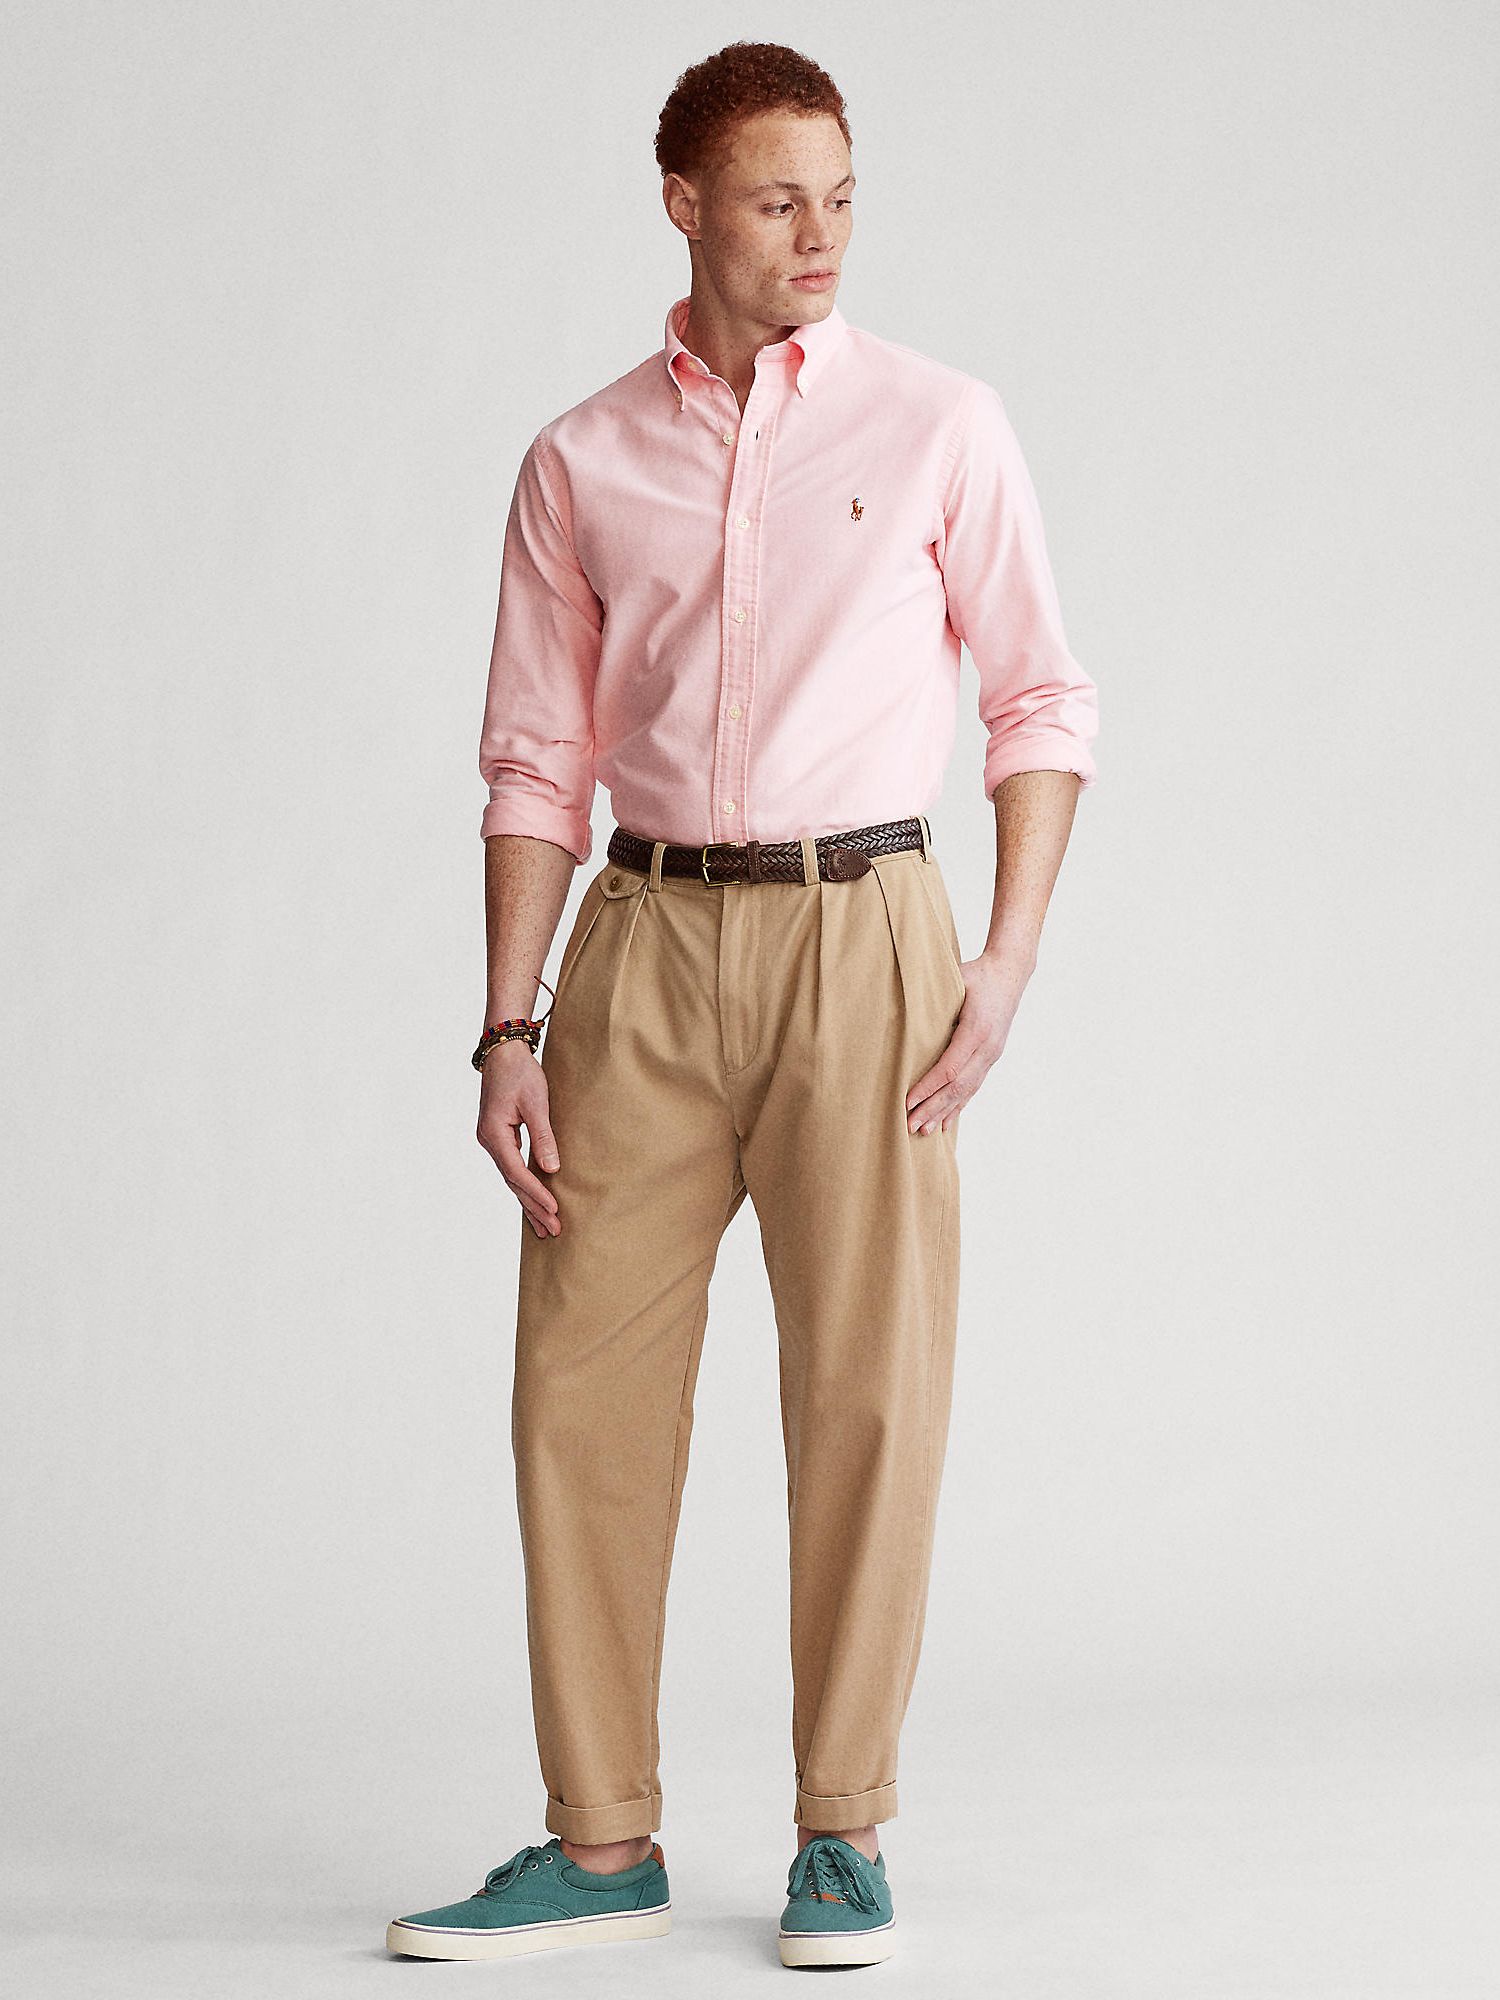 Polo Ralph Lauren Custom Fit Oxford Shirt,Pink, XS